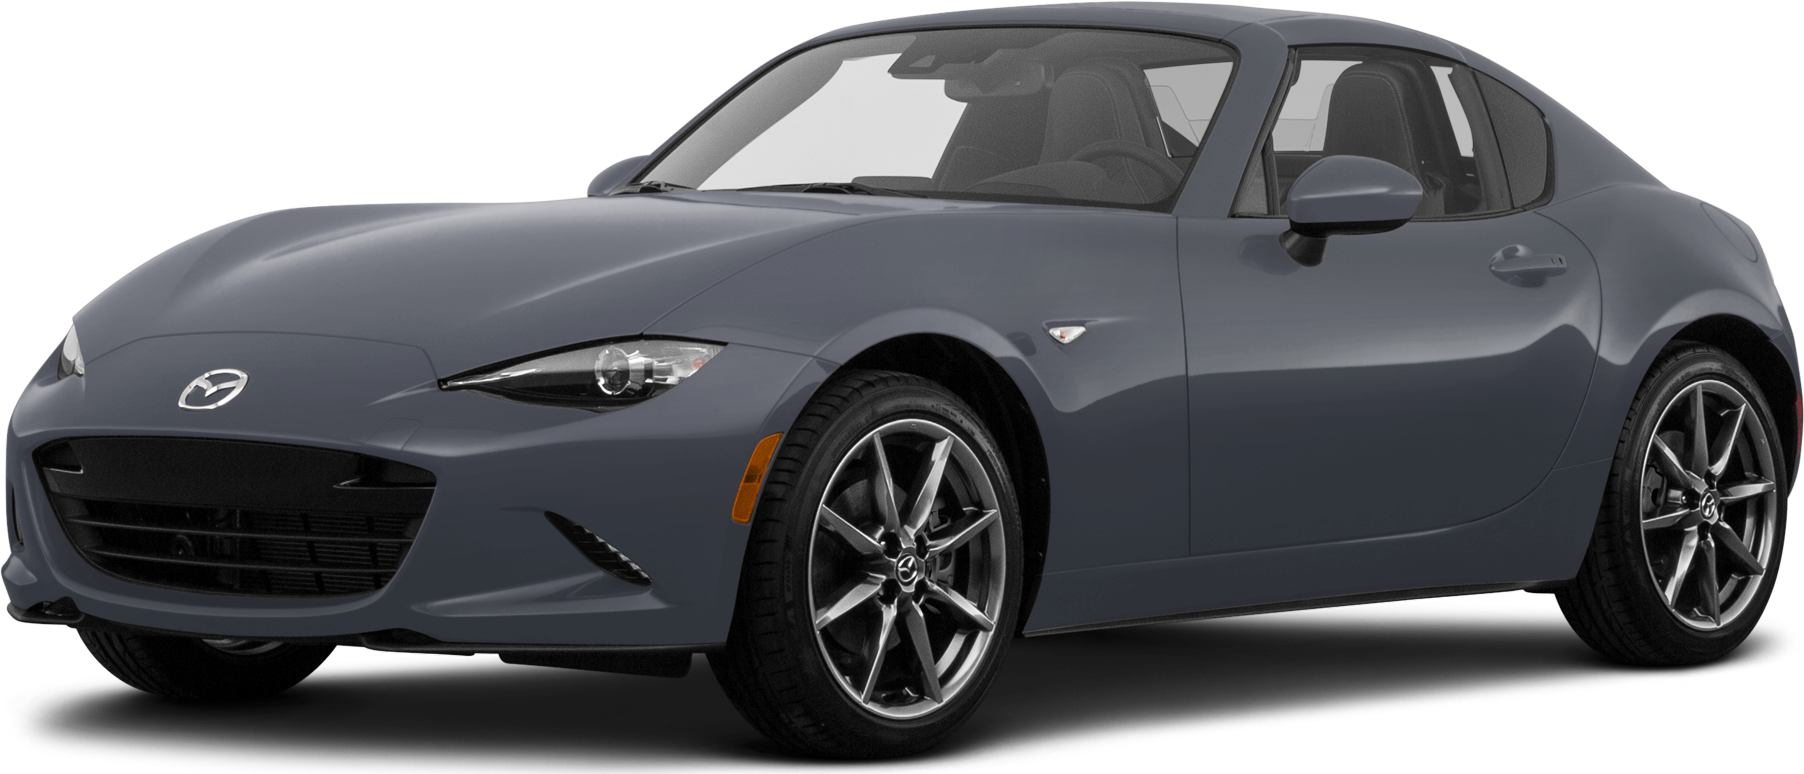 2023 Mazda MX-5 Miata: Pricing and Packaging - Nov 17, 2022